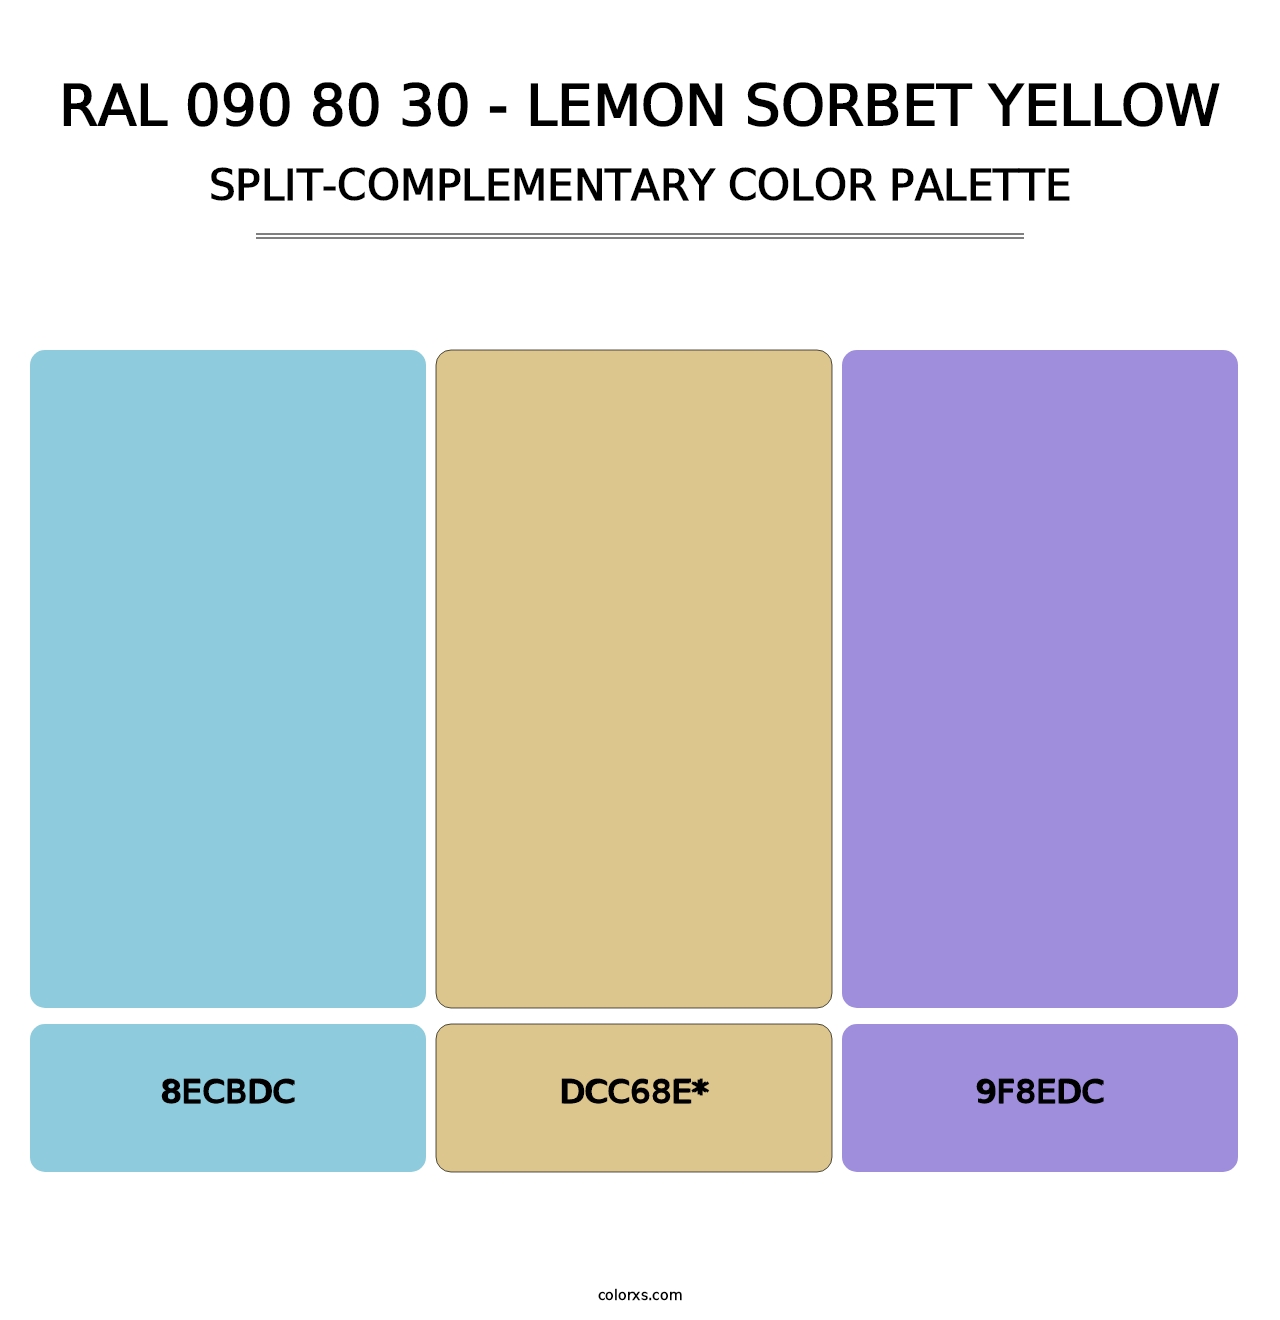 RAL 090 80 30 - Lemon Sorbet Yellow - Split-Complementary Color Palette